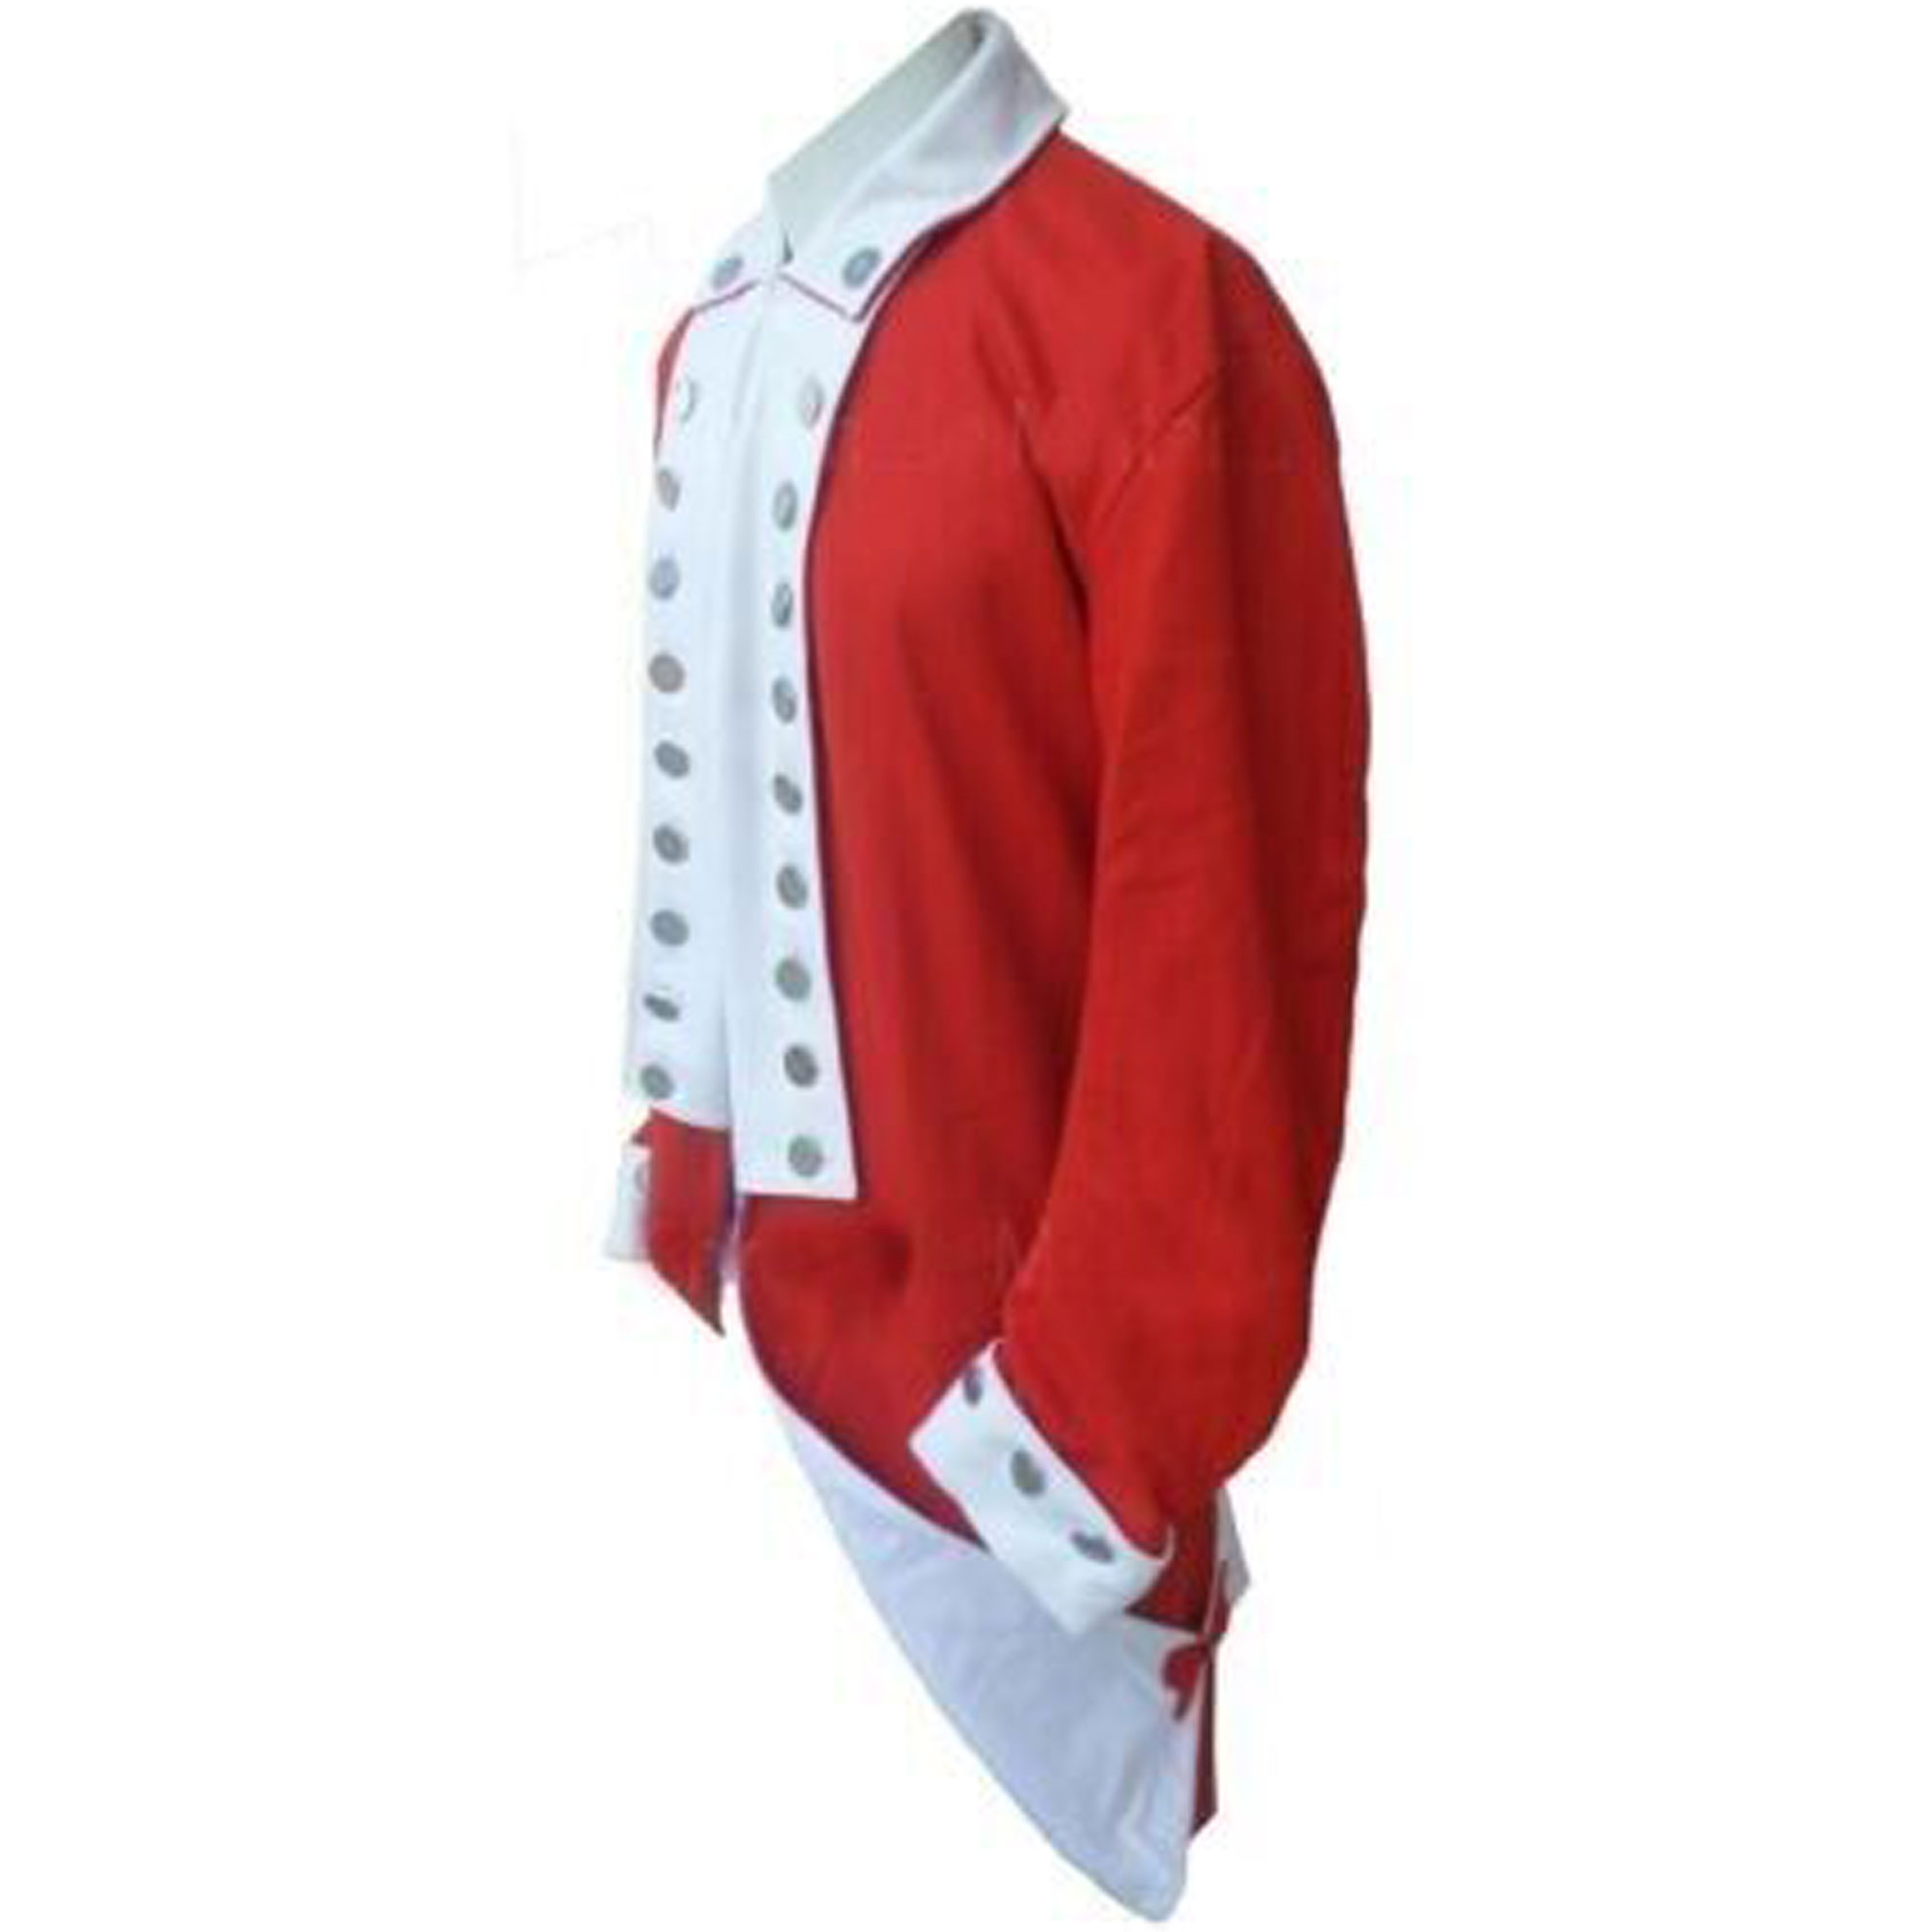 New Royal British Marine Revolutionary War Coat Men Red Wool Jacket